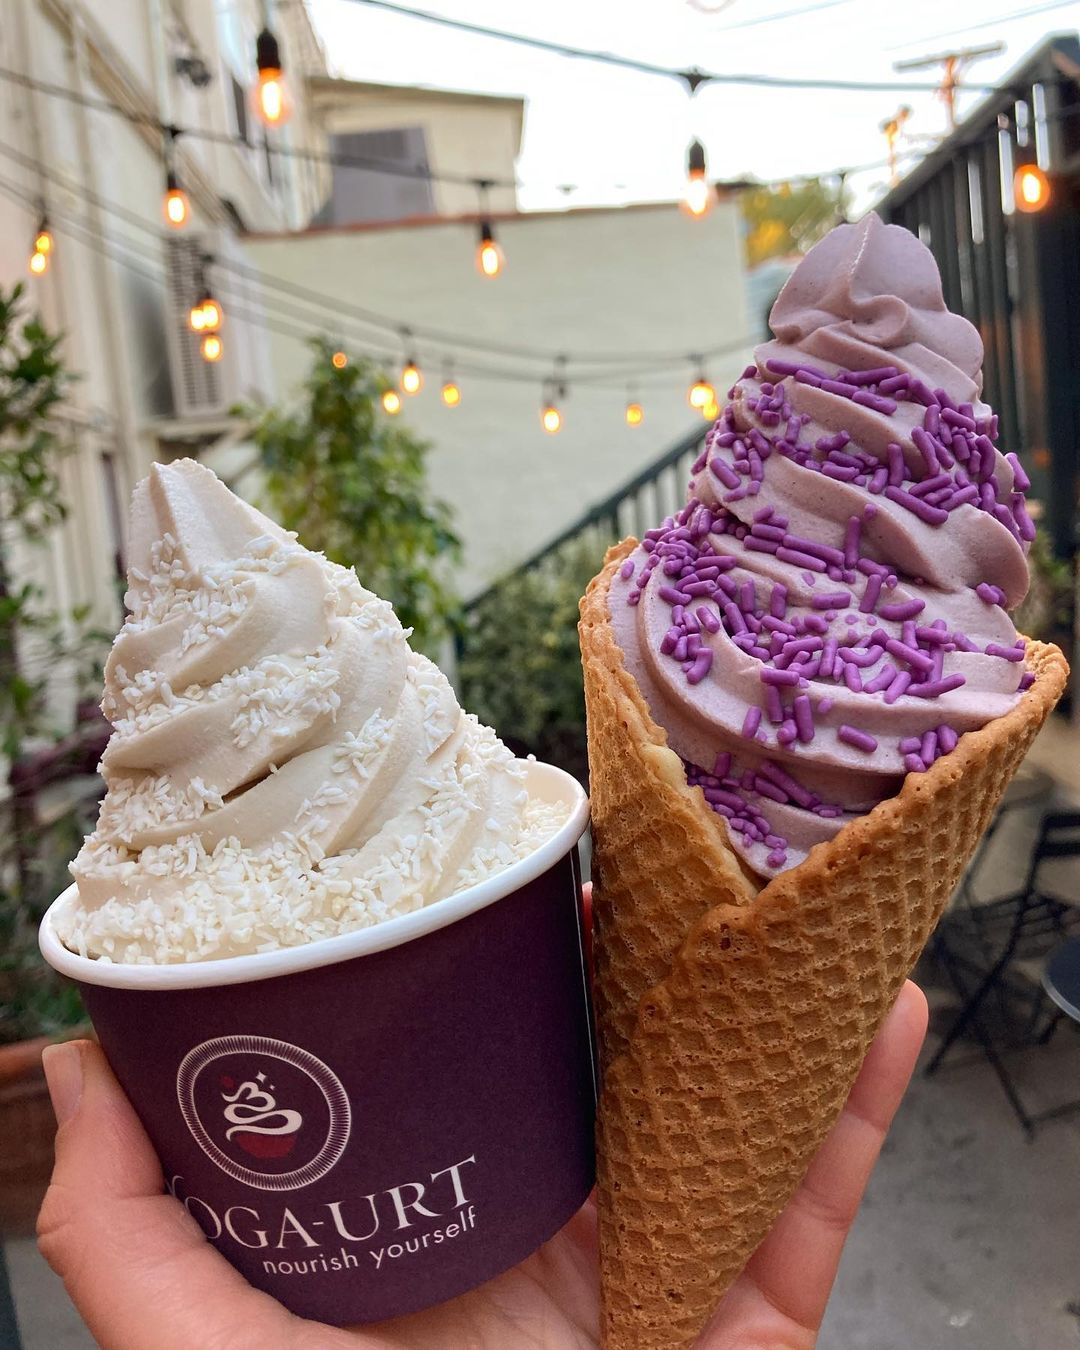 Two vegan ice creams from Yoga-urt